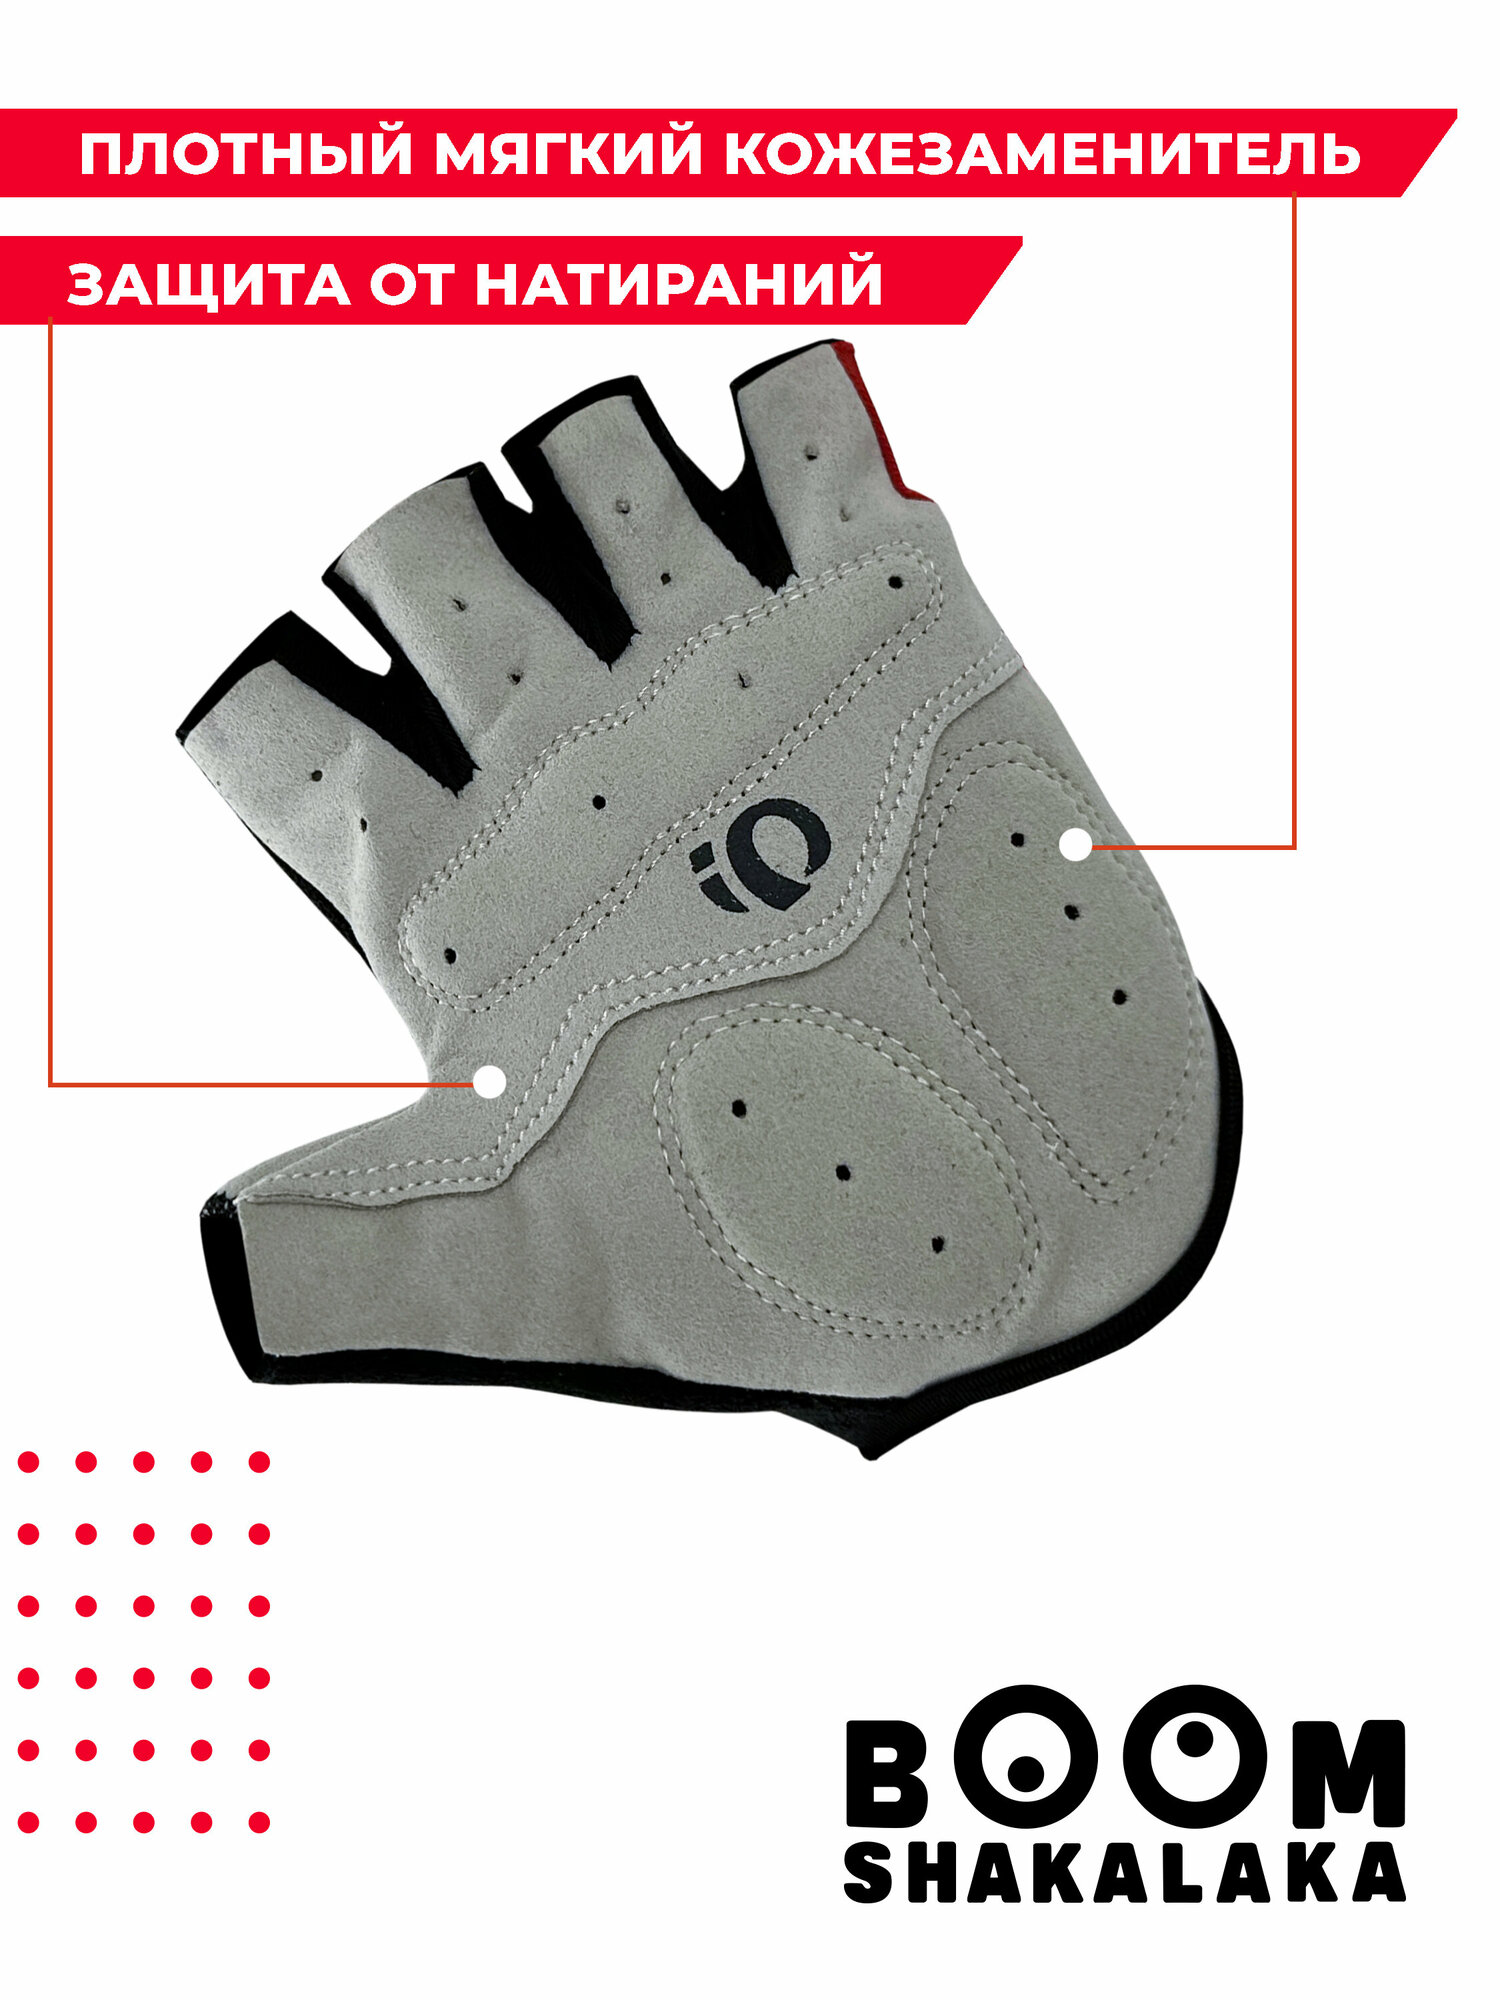 Перчатки для фитнеса Boomshakalaka, цвет черно-серо-красный, размер M, обхват ладони 190-210 мм.